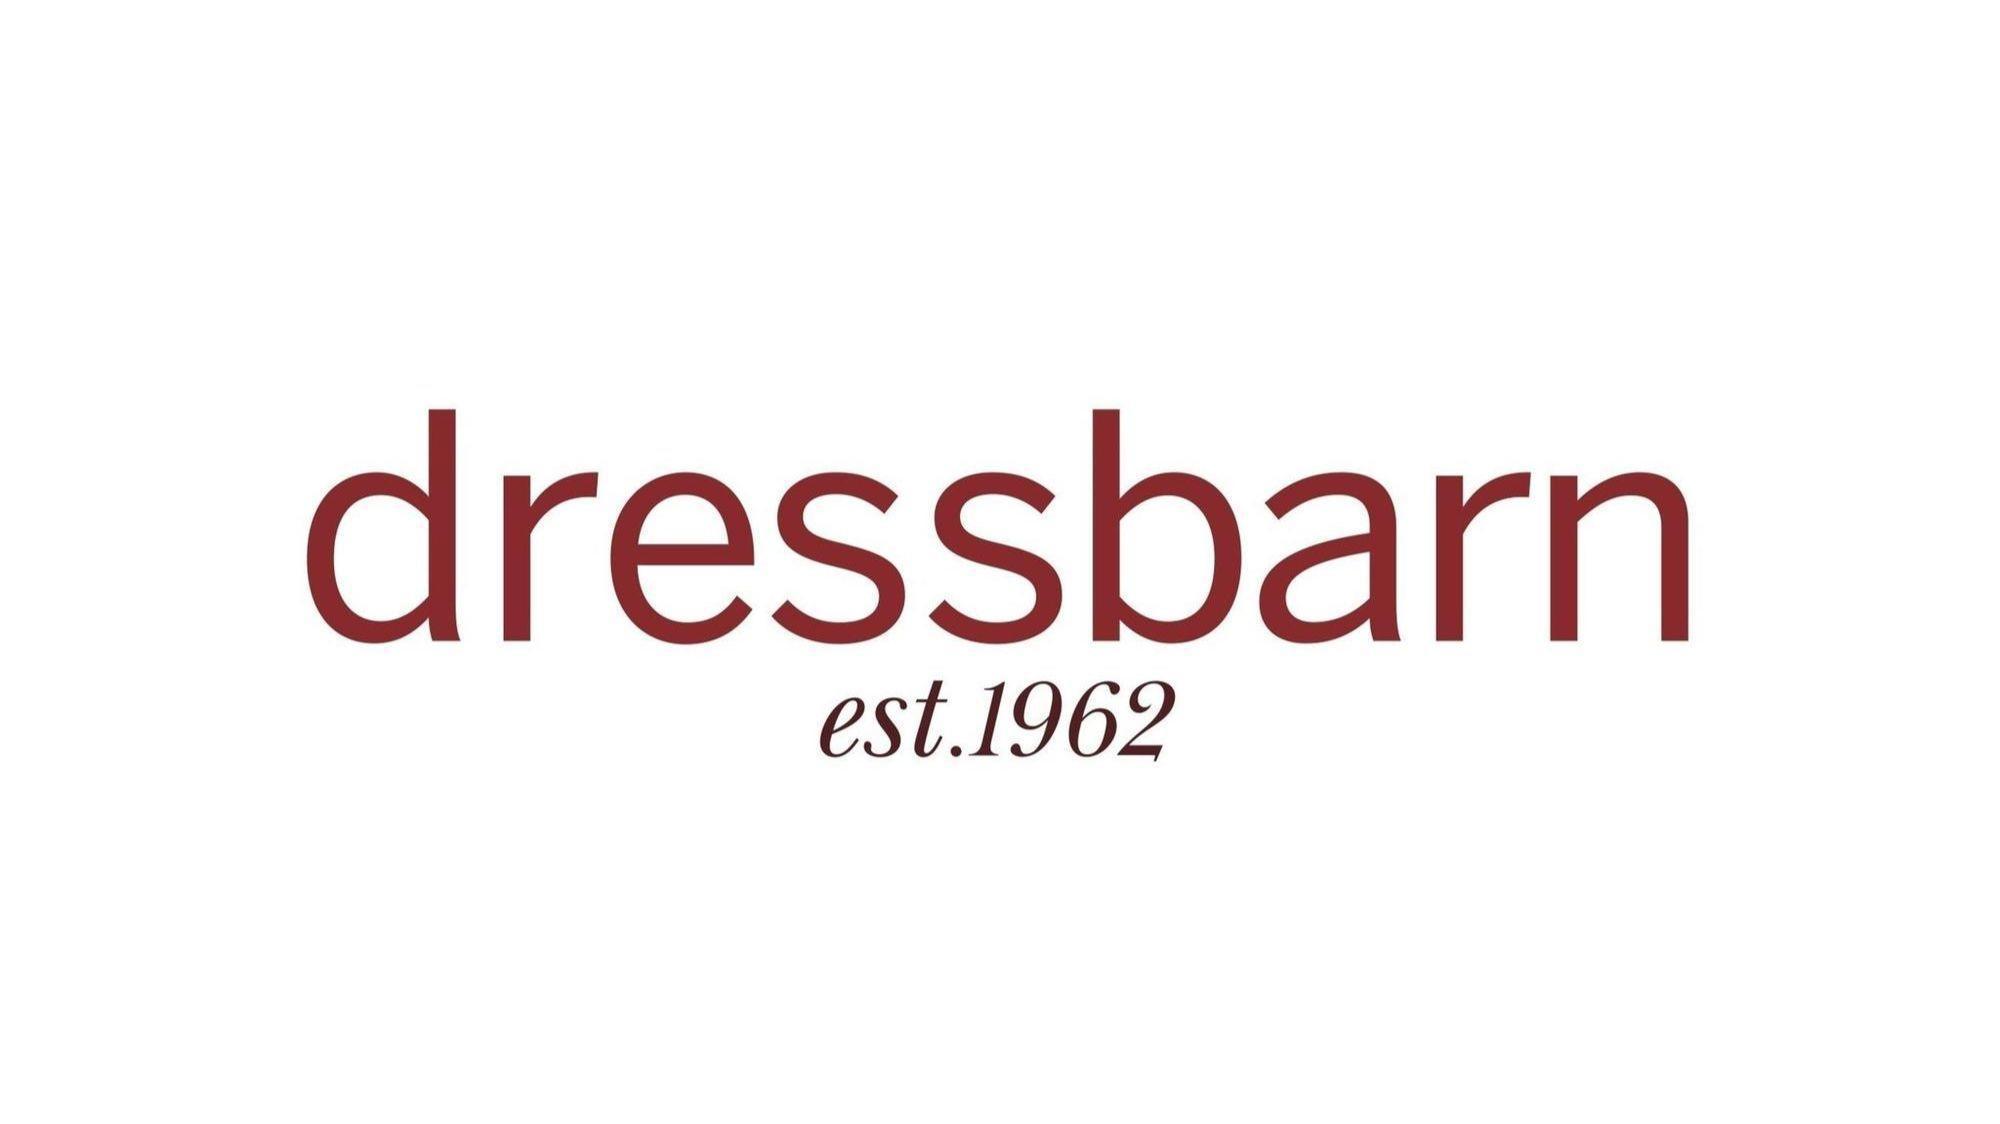 Dressbarn Logo - Another Sioux Falls retailer going out of business: Dressbarn. News